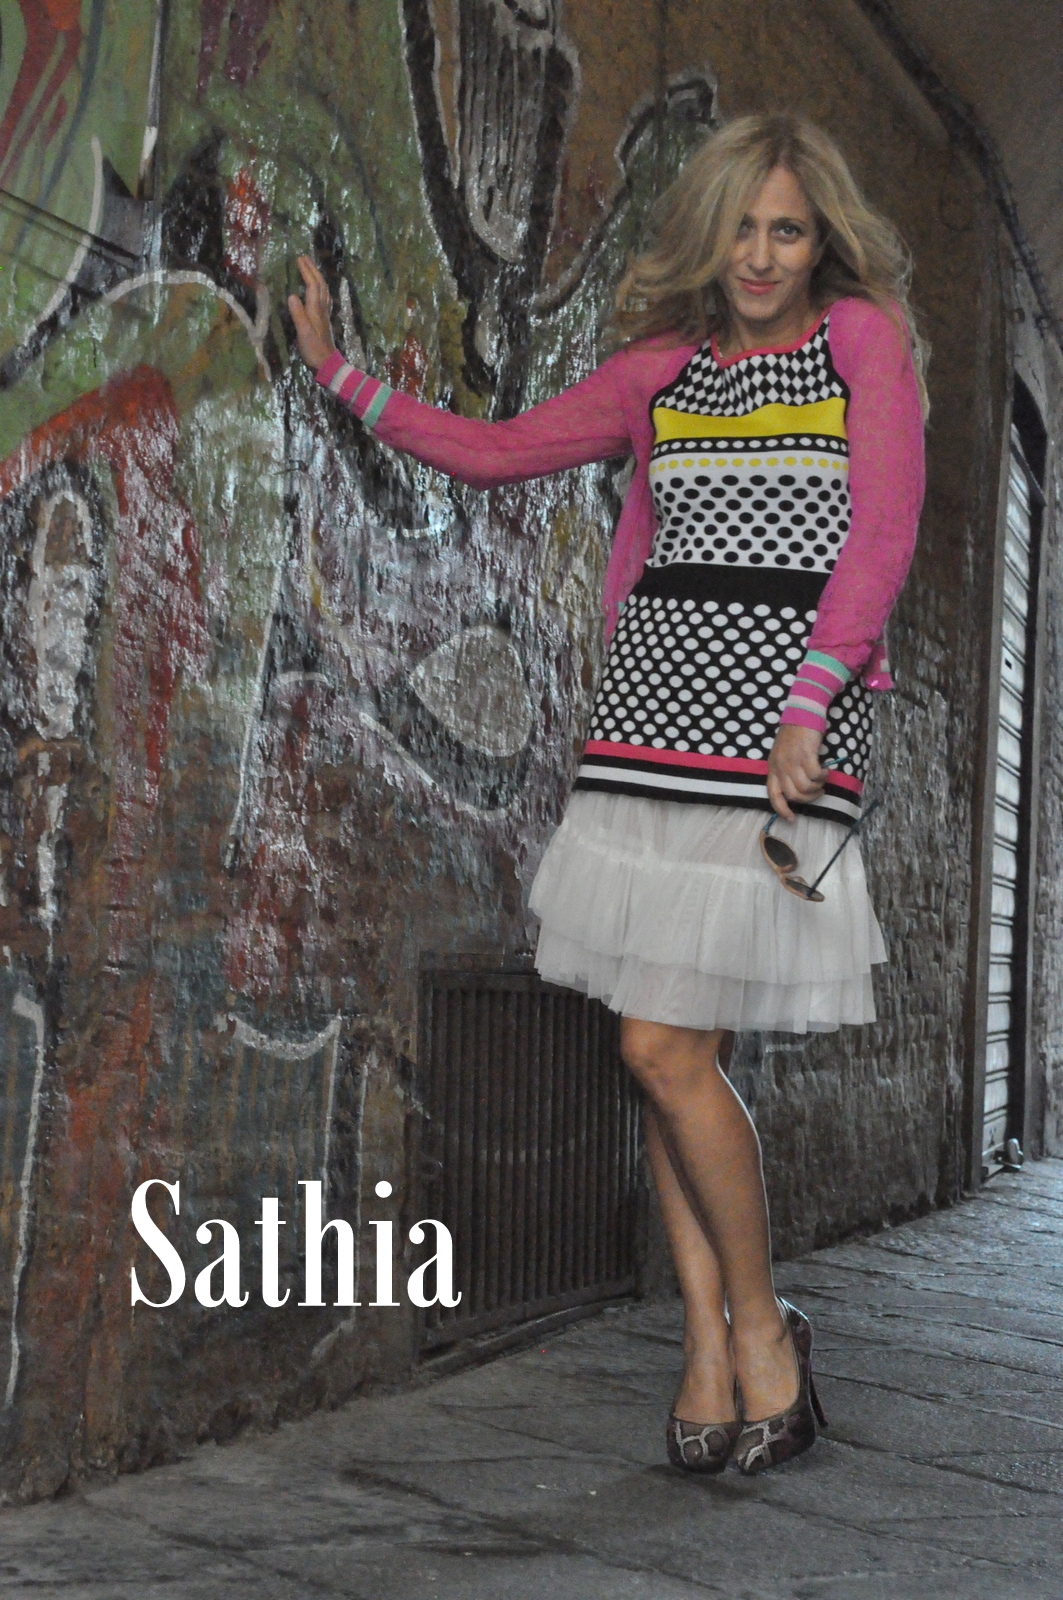 sathia back stage (8)